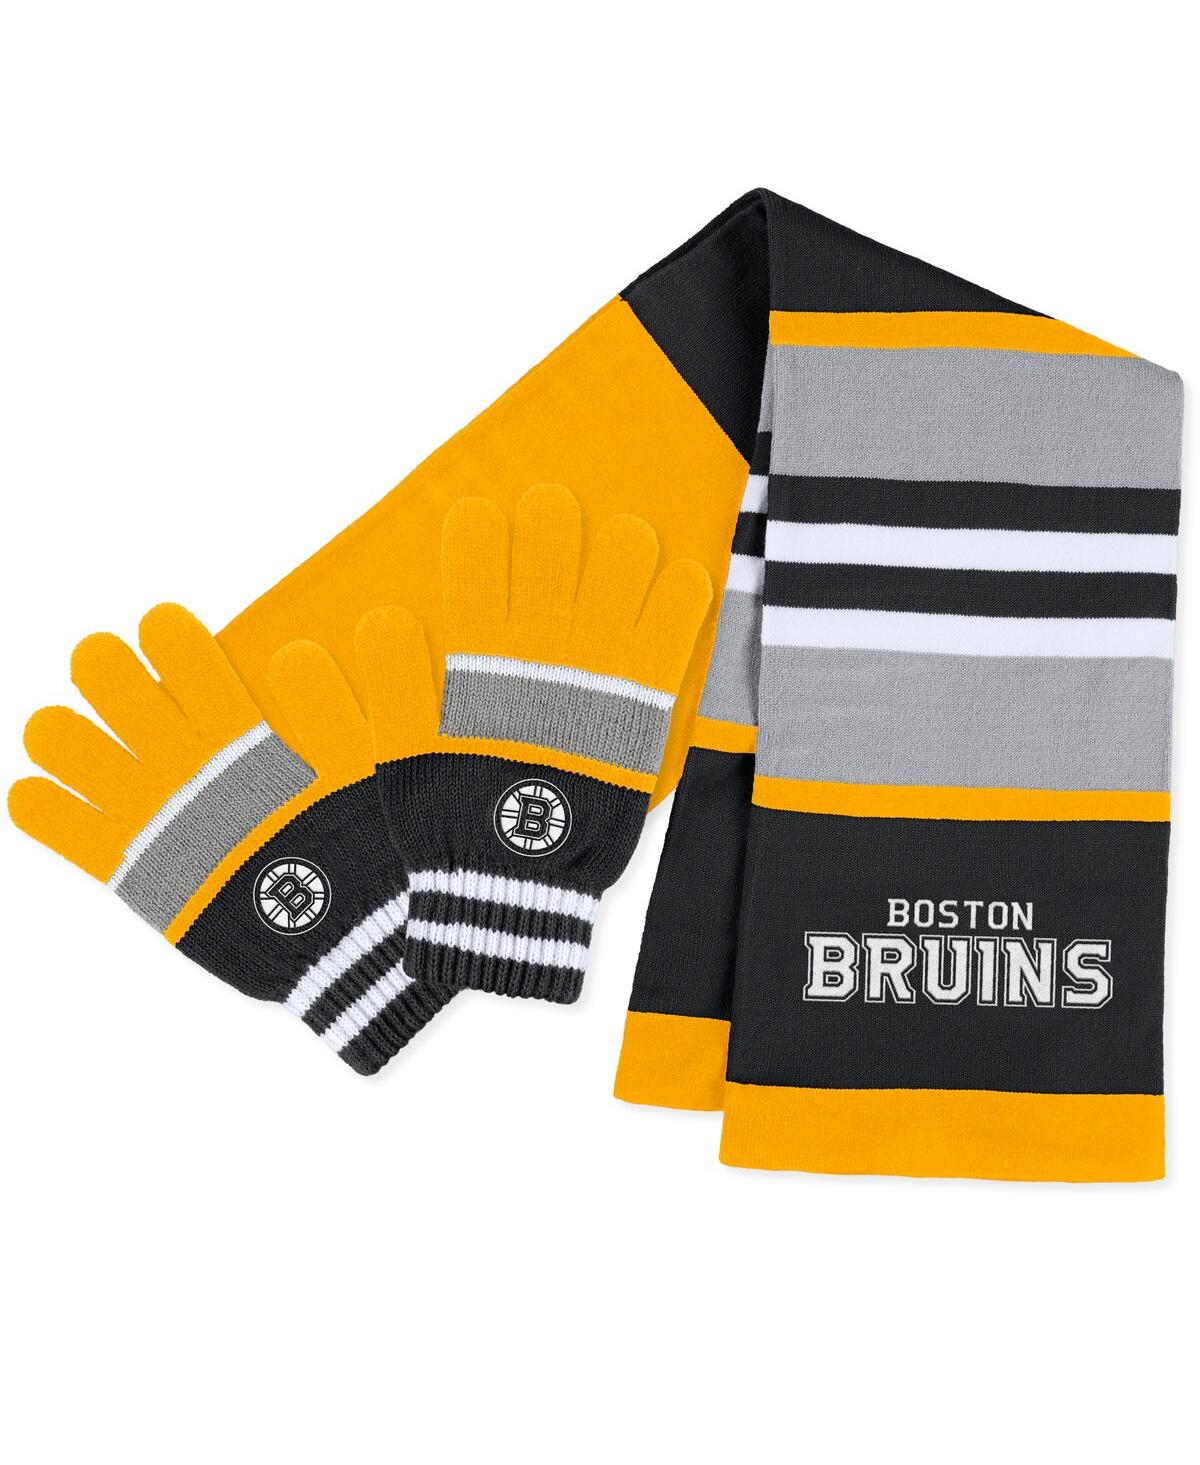 Women's Wear by Erin Andrews Boston Bruins Stripe Glove and Scarf Set - Yellow